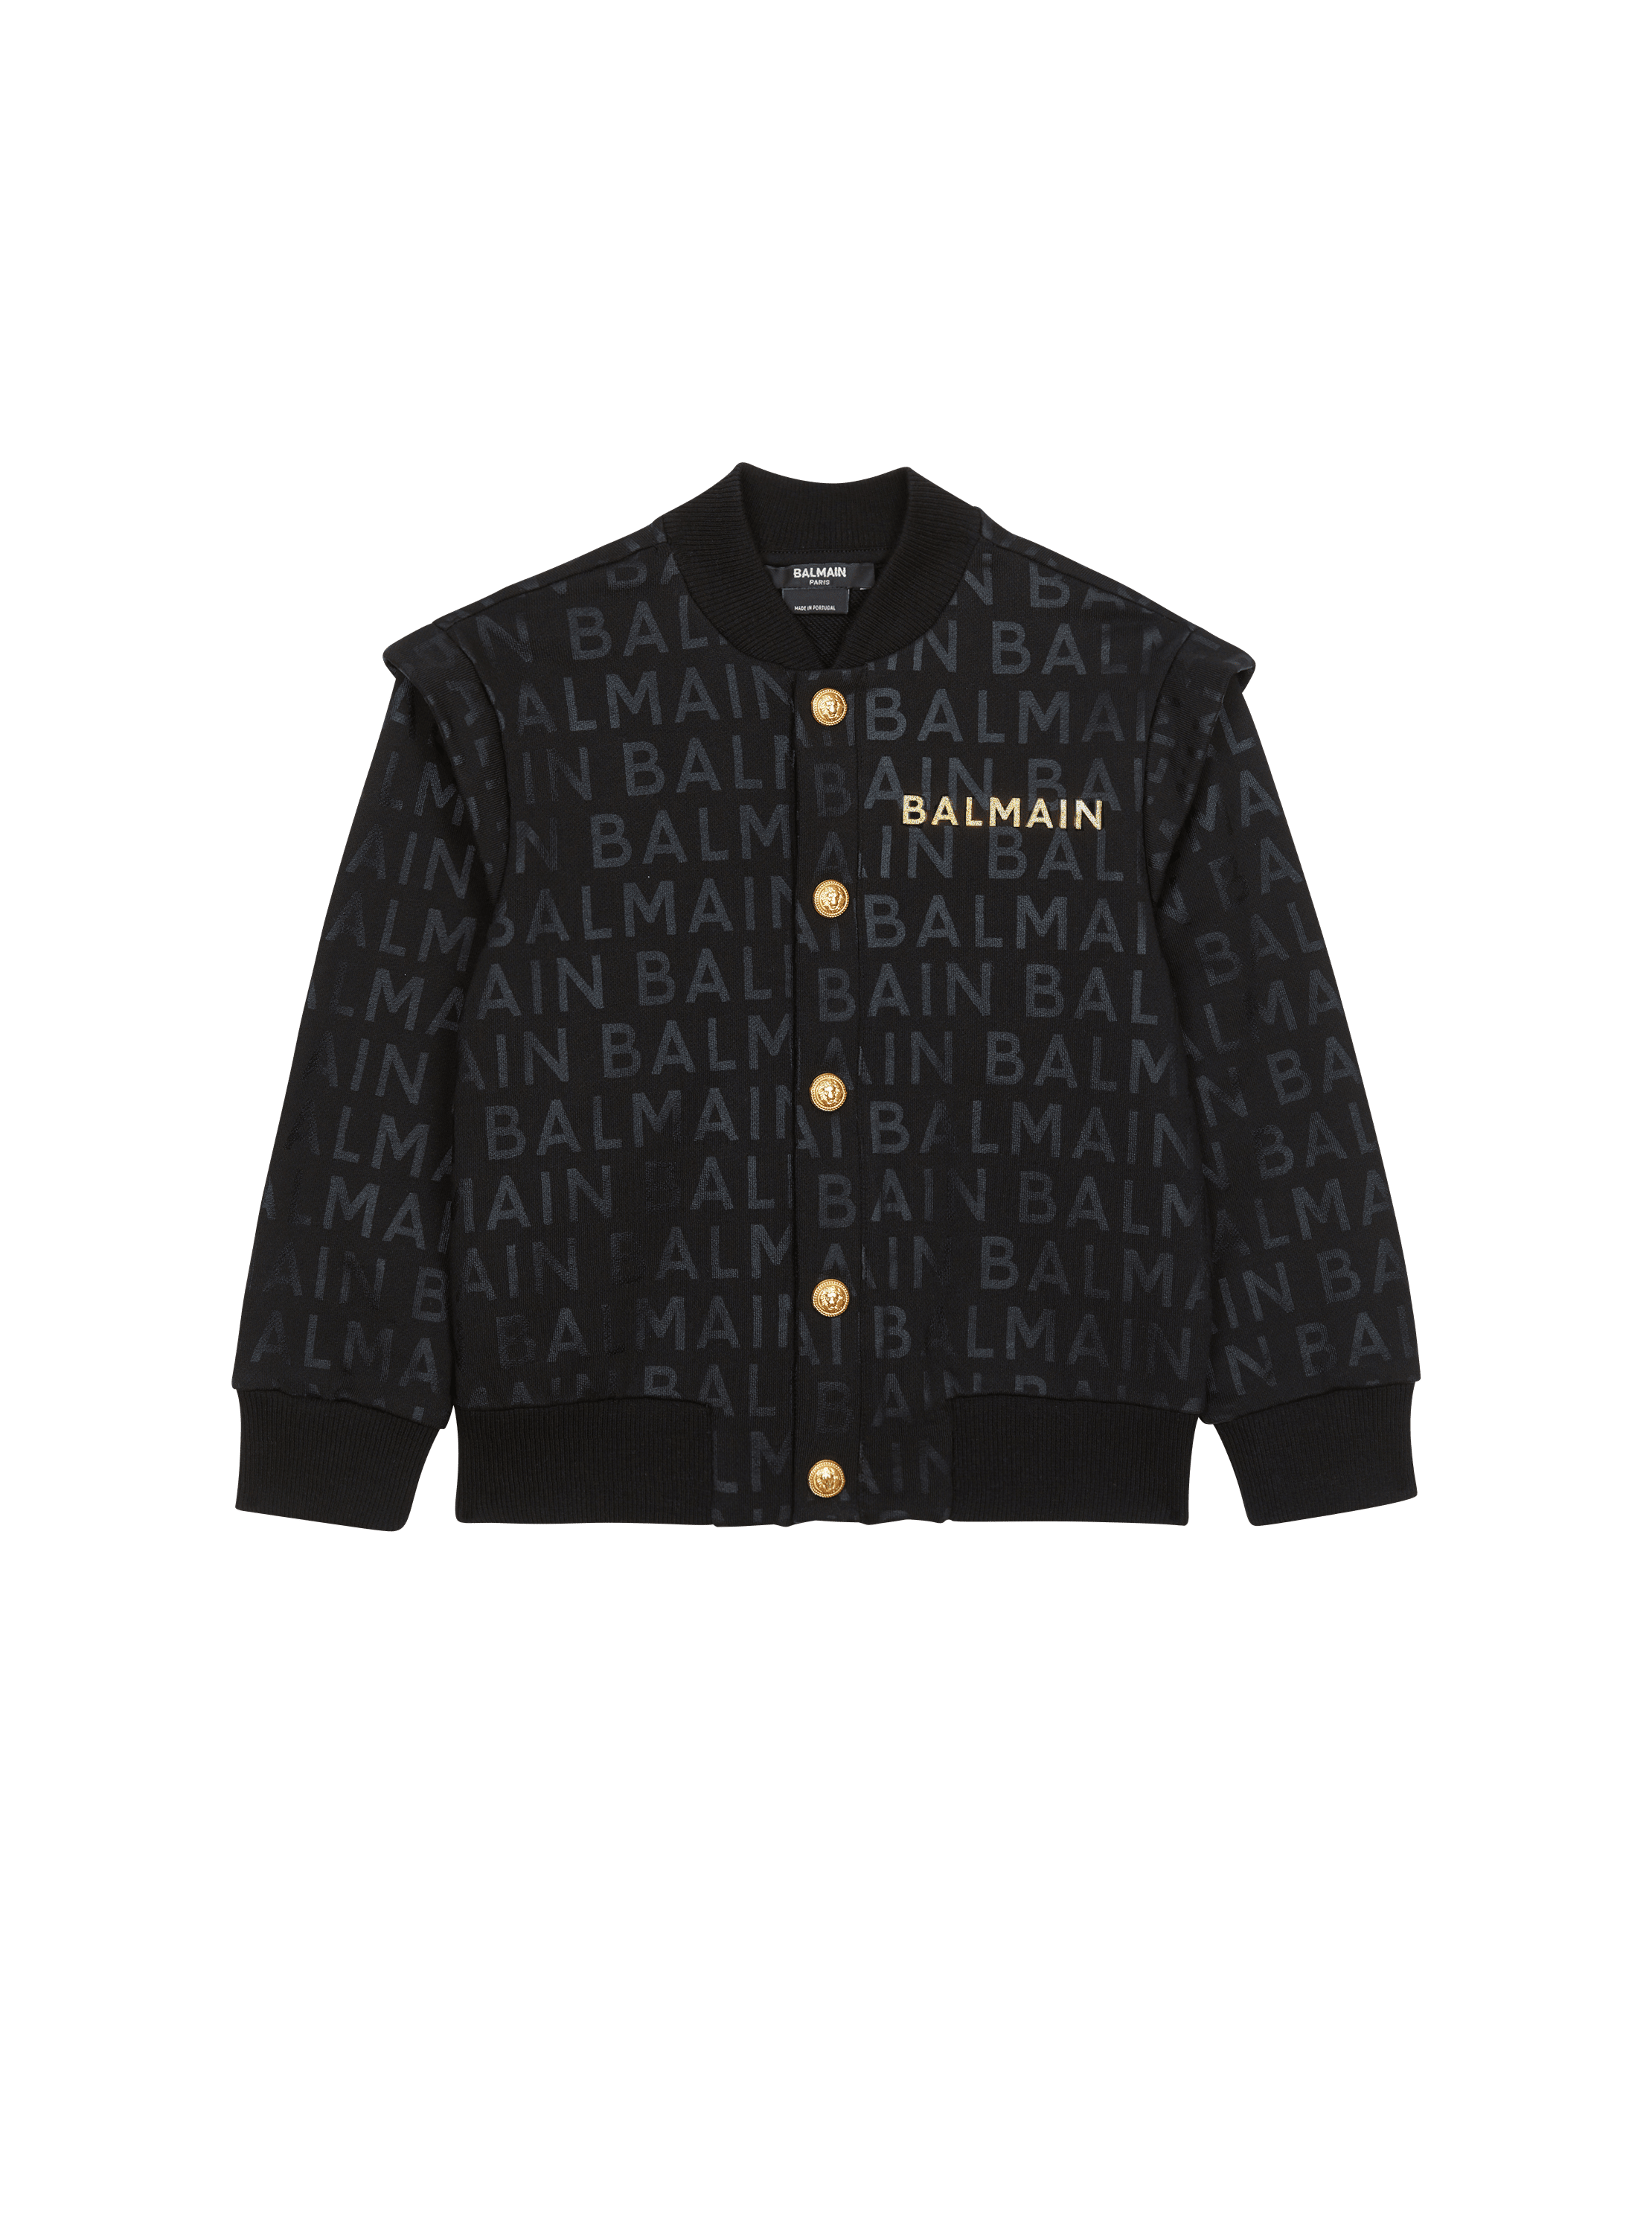 Balmain monogrammed jacket